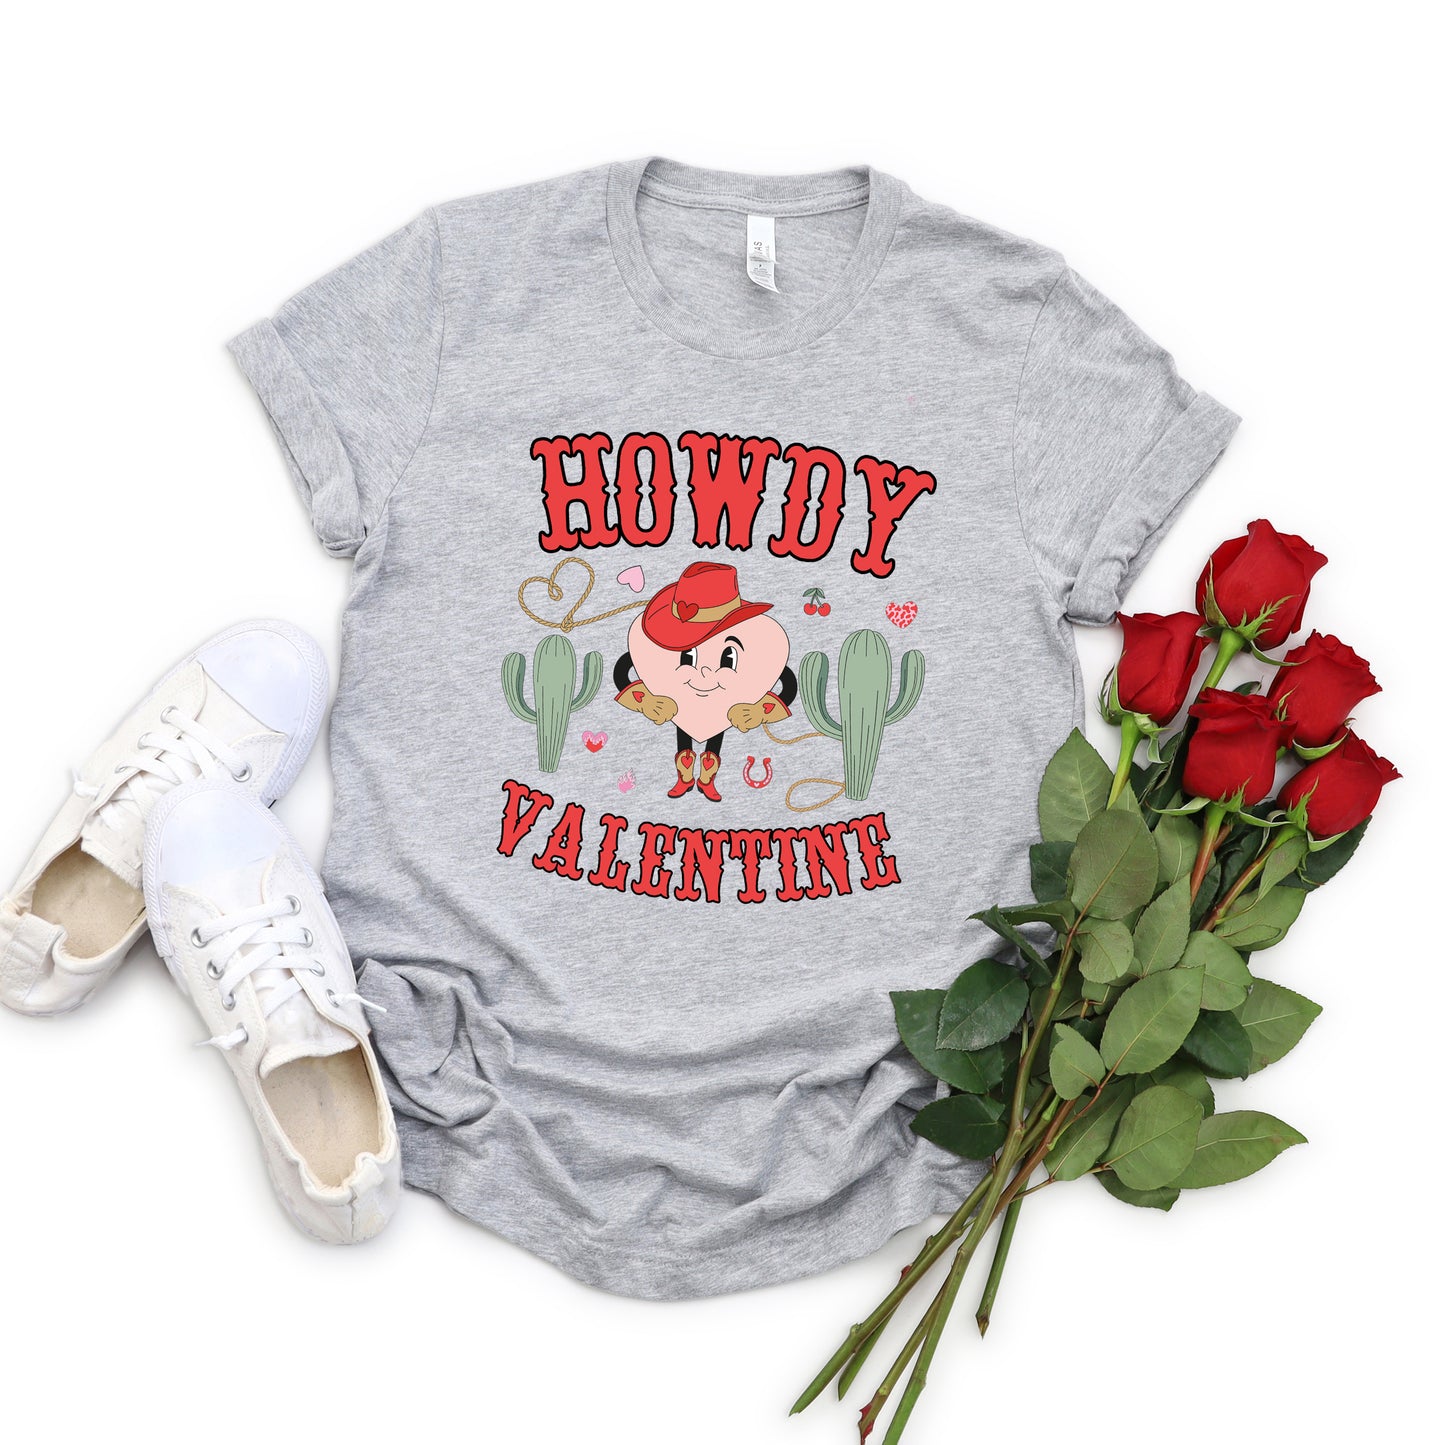 Howdy Valentine Heart | Short Sleeve Crew Neck